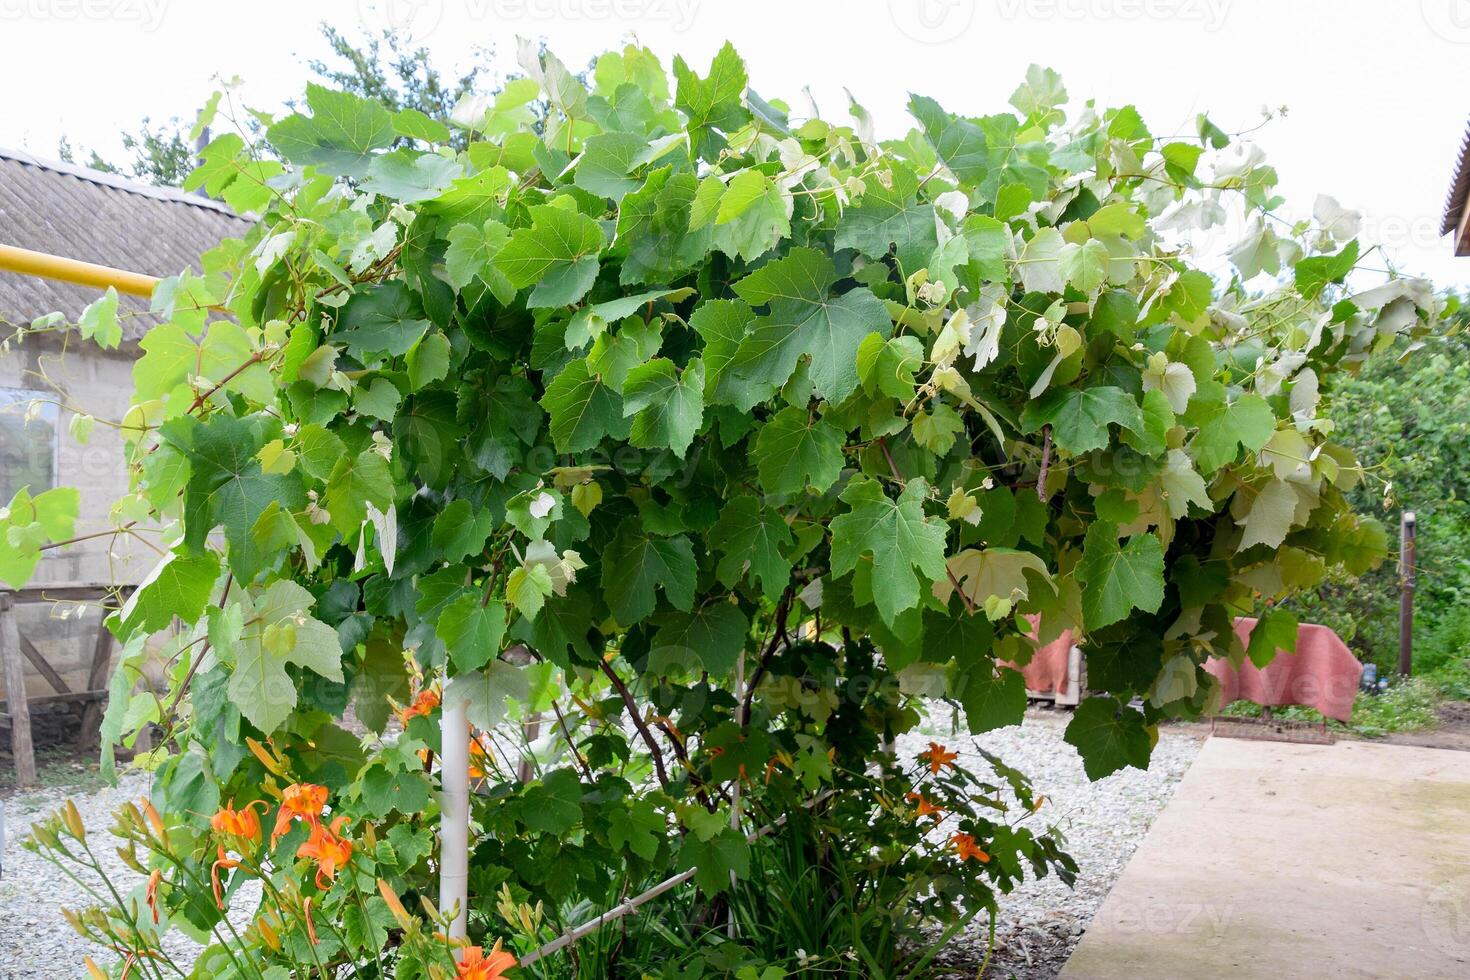 Pavilions with grapes. A lush grape bush photo